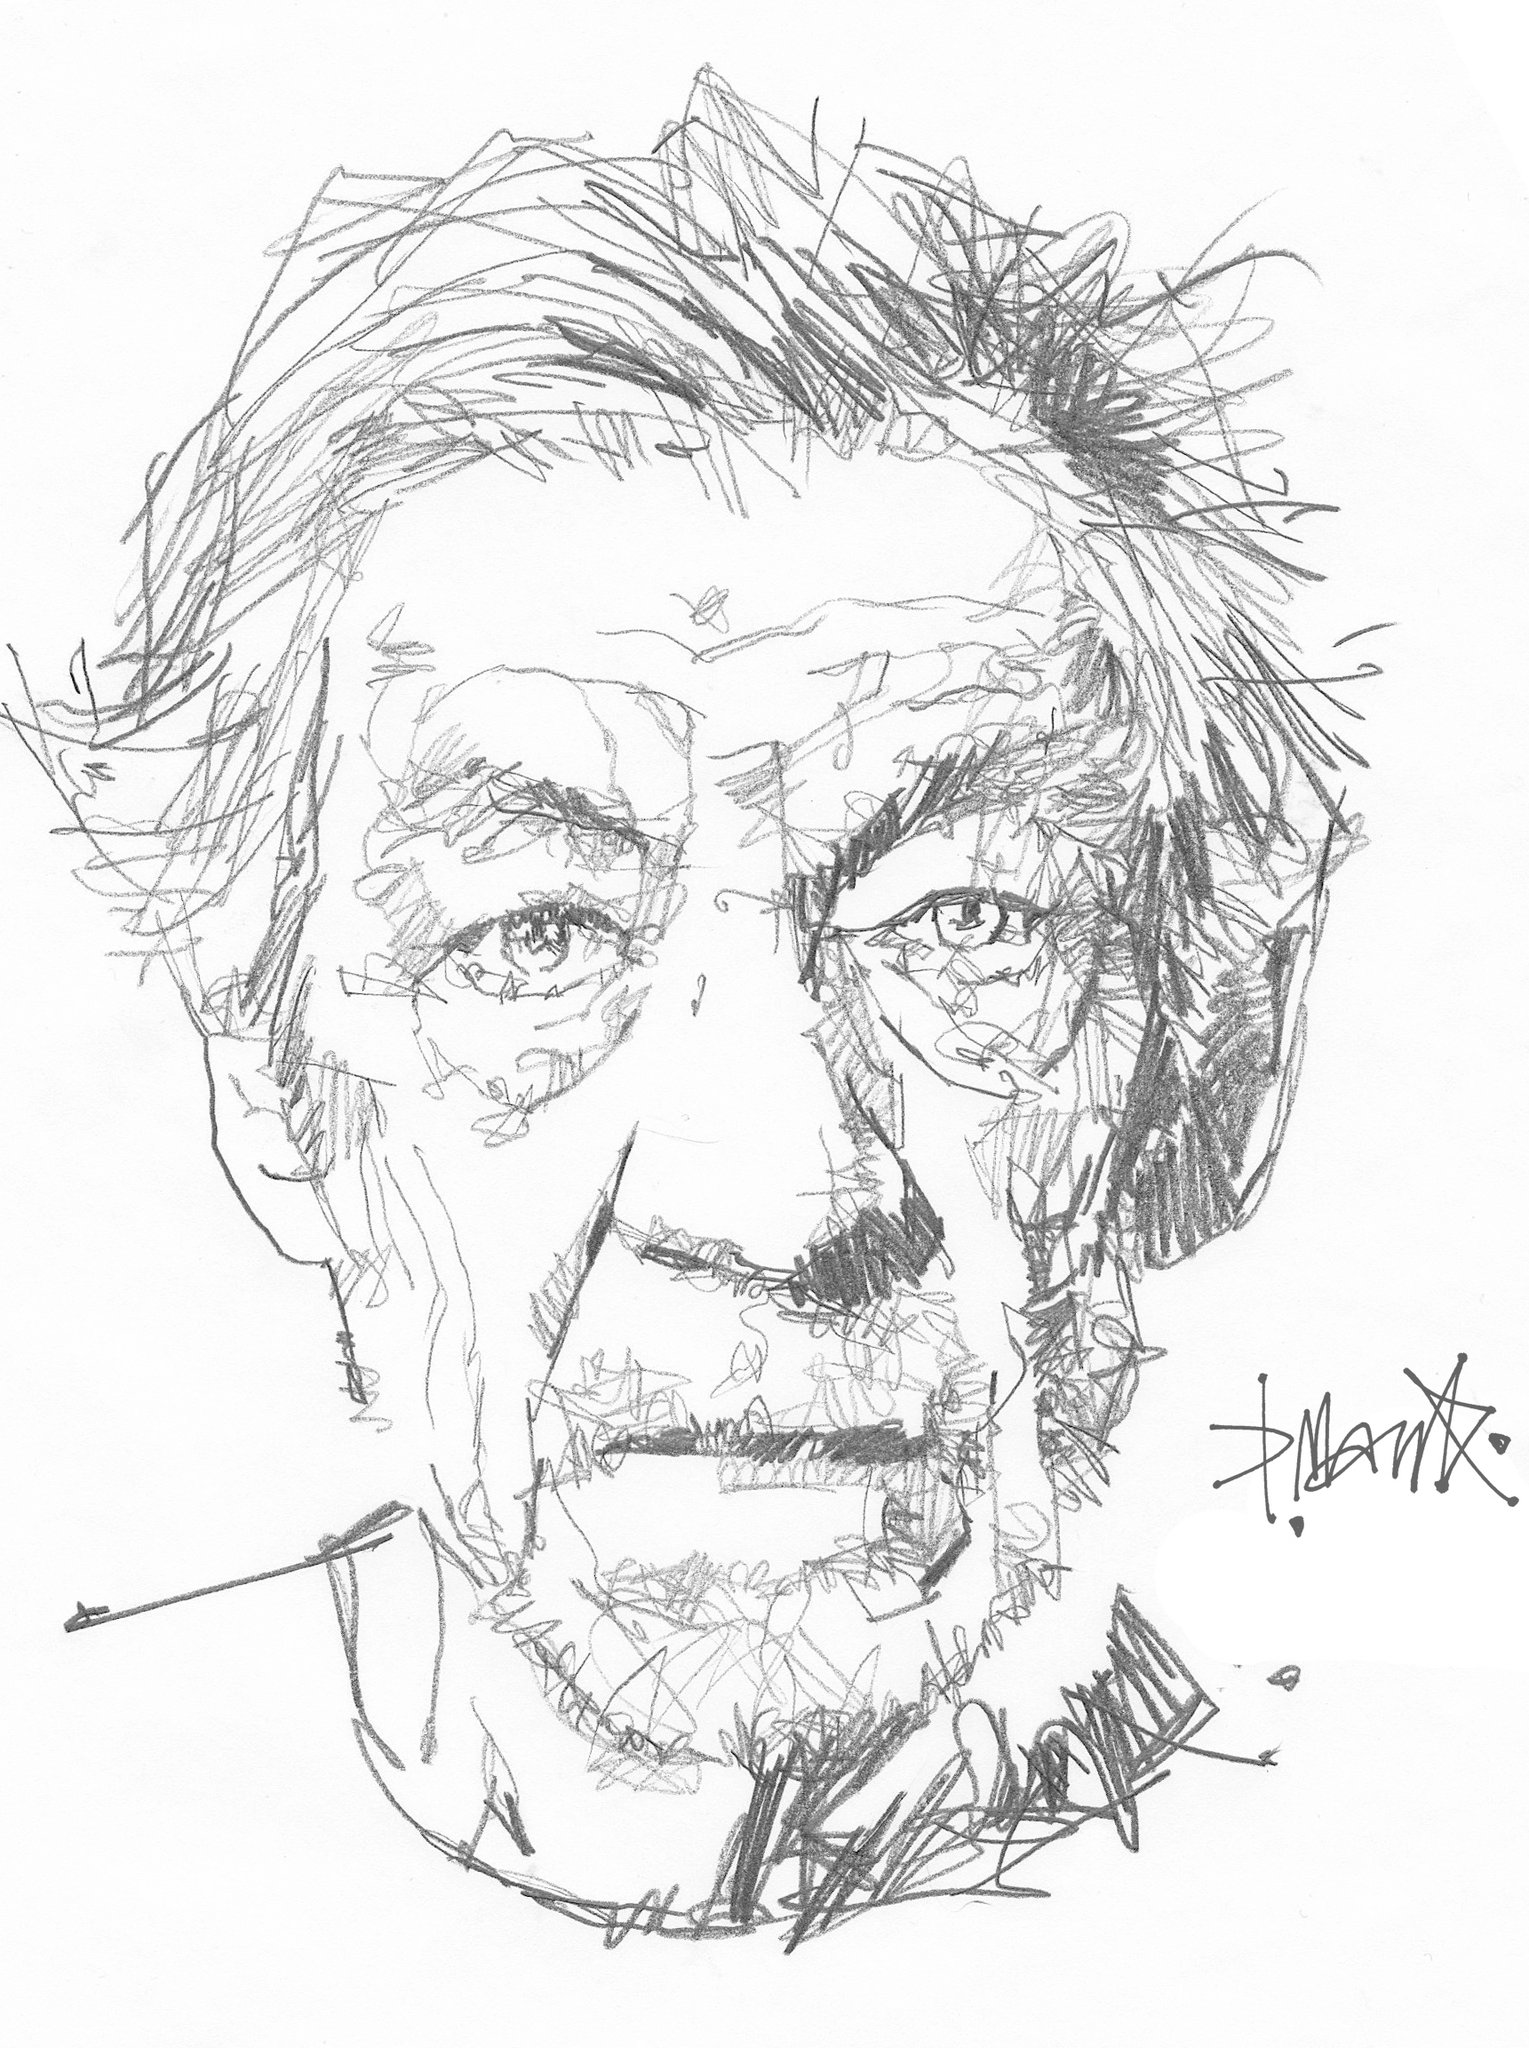 Happy Birthday Sir Ian McKellen 83 today 